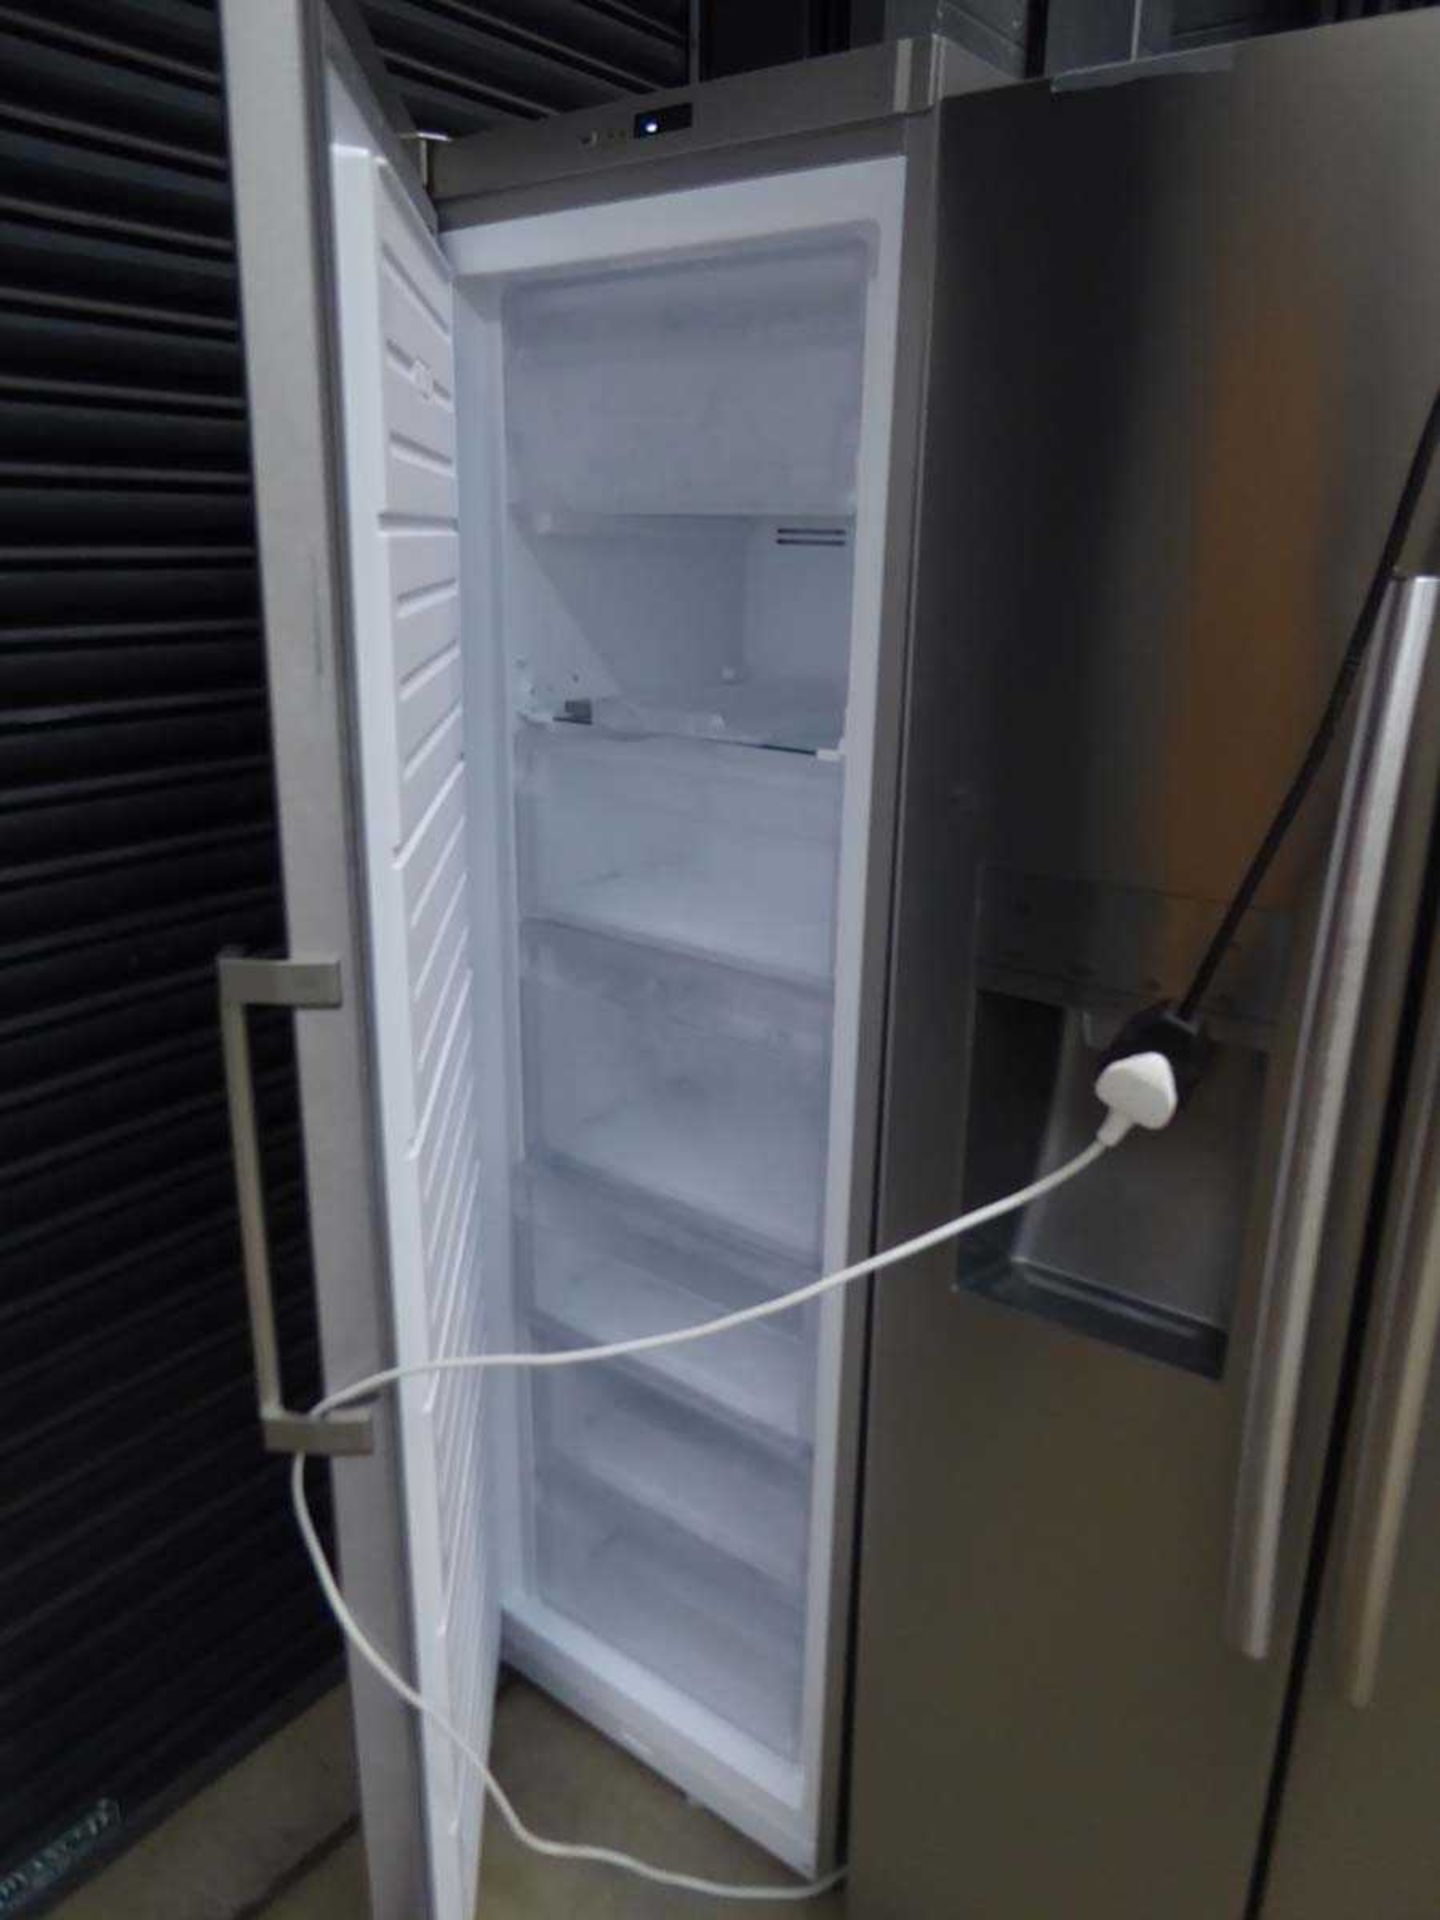 Smeg single door freezer - Image 2 of 2